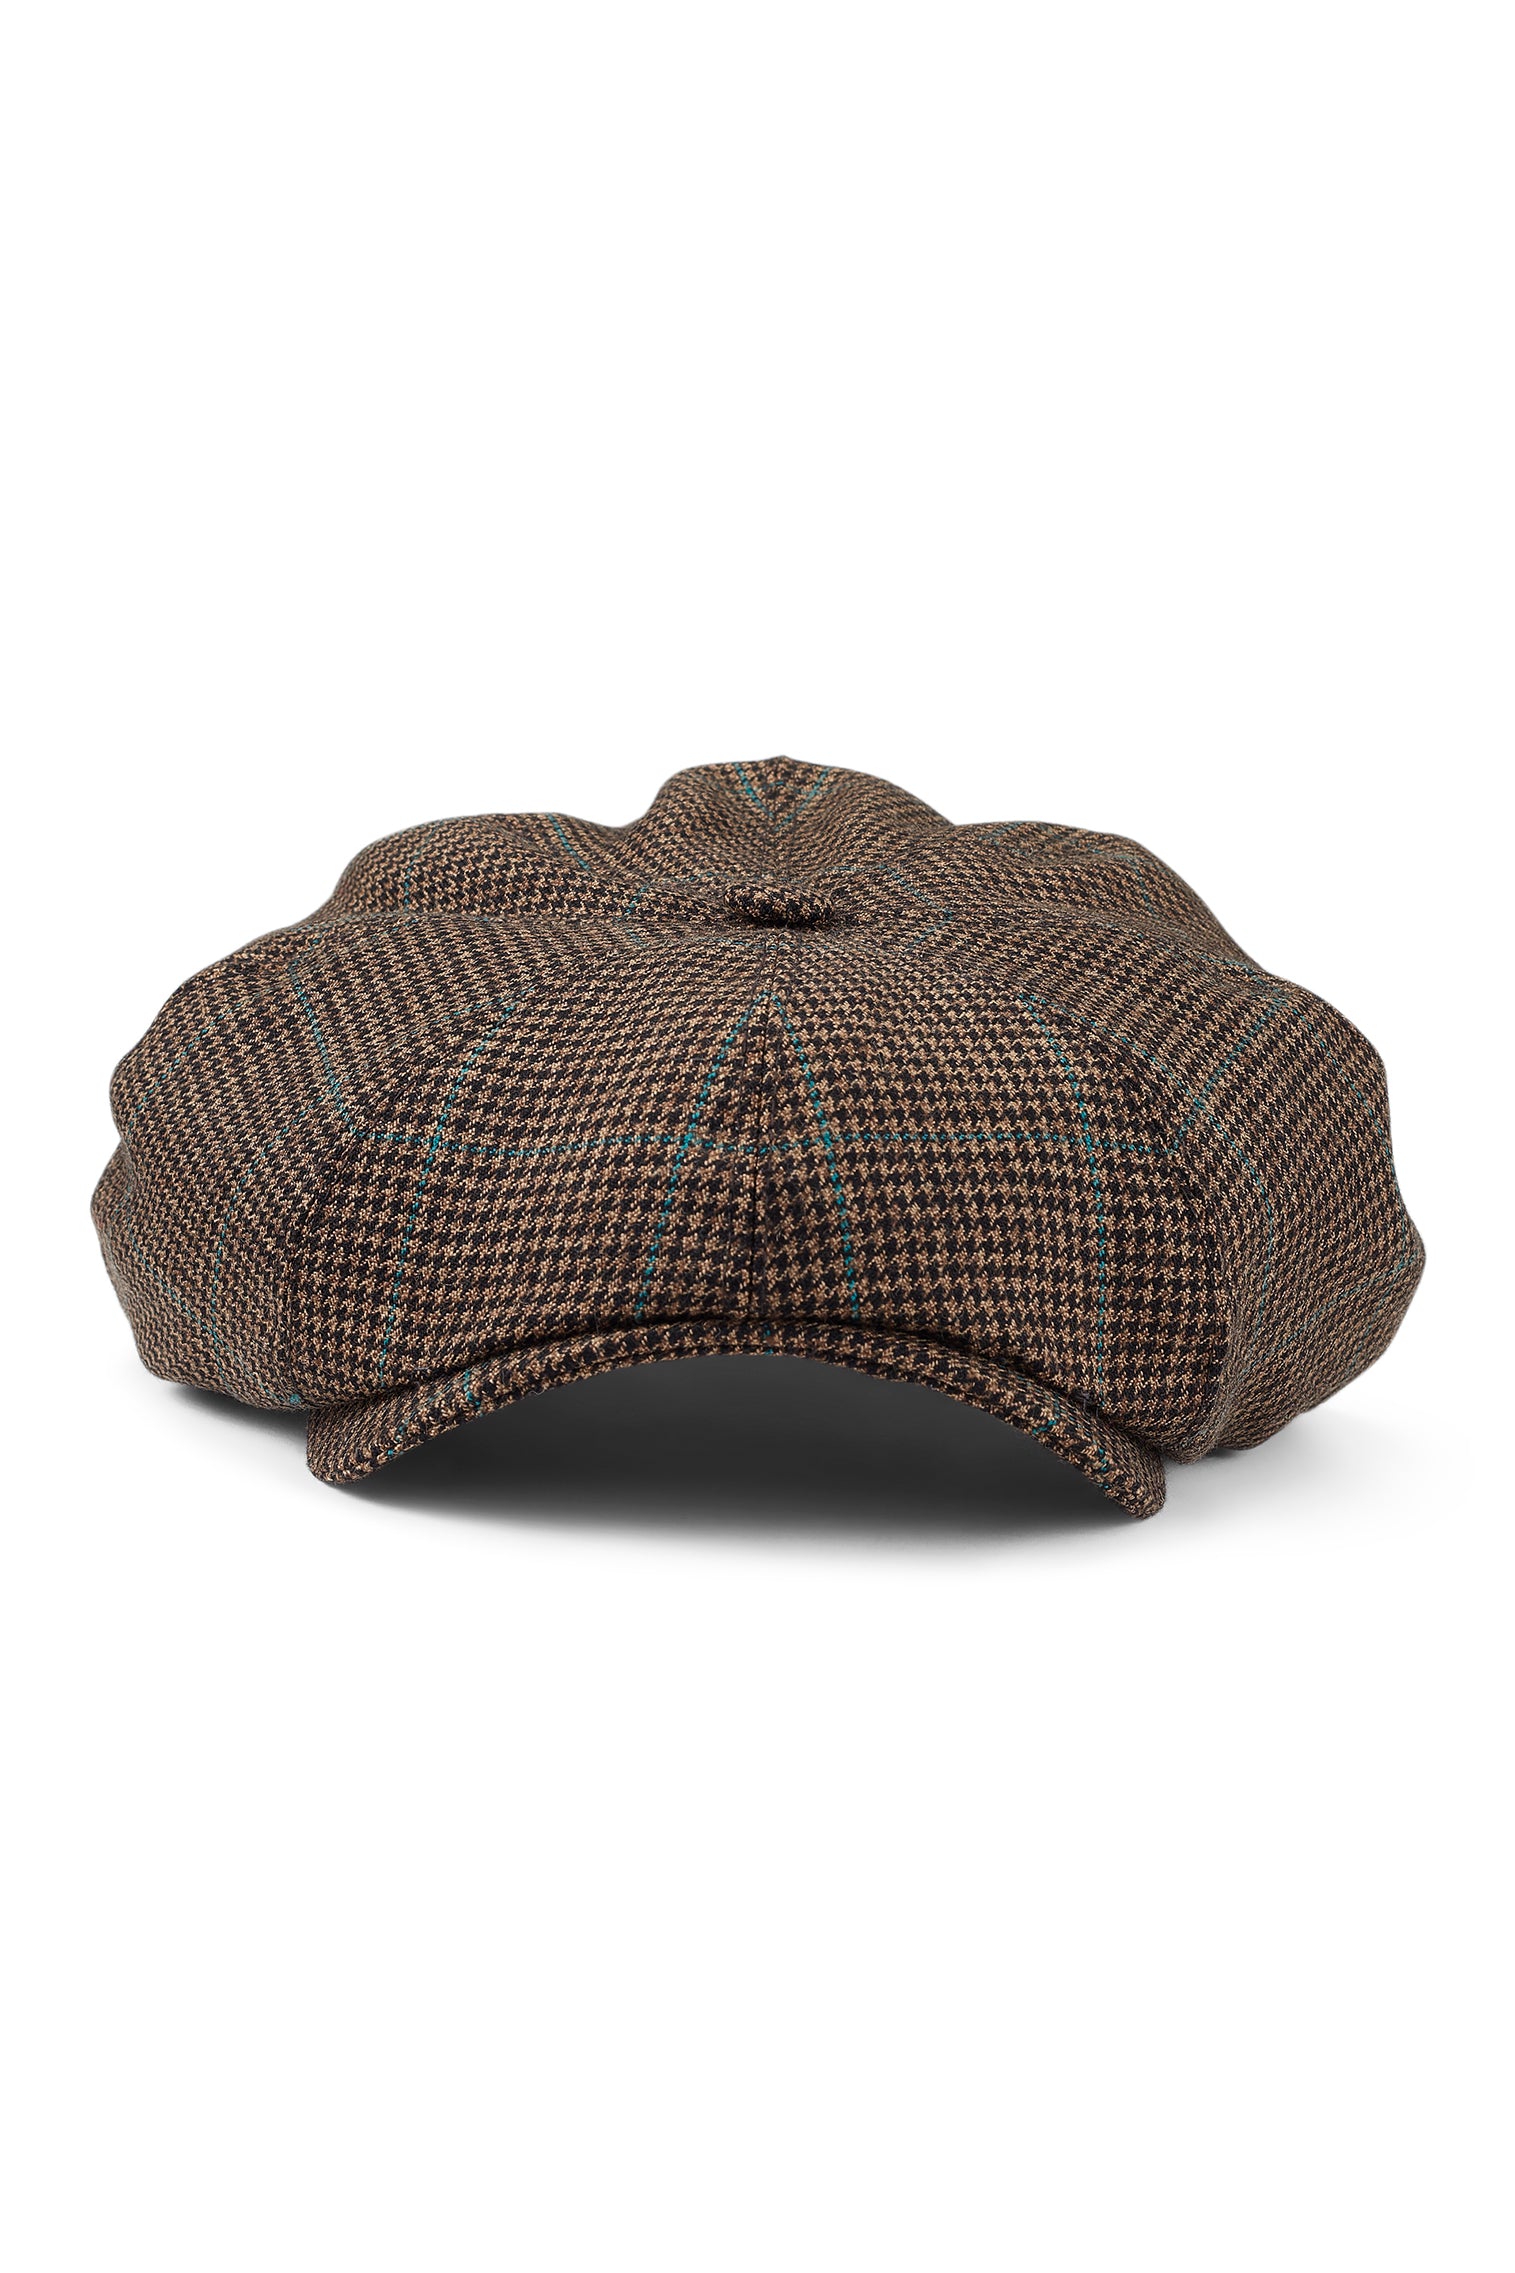 Highgrove Brown Bakerboy Cap - New Season Hat Collection - Lock & Co. Hatters London UK